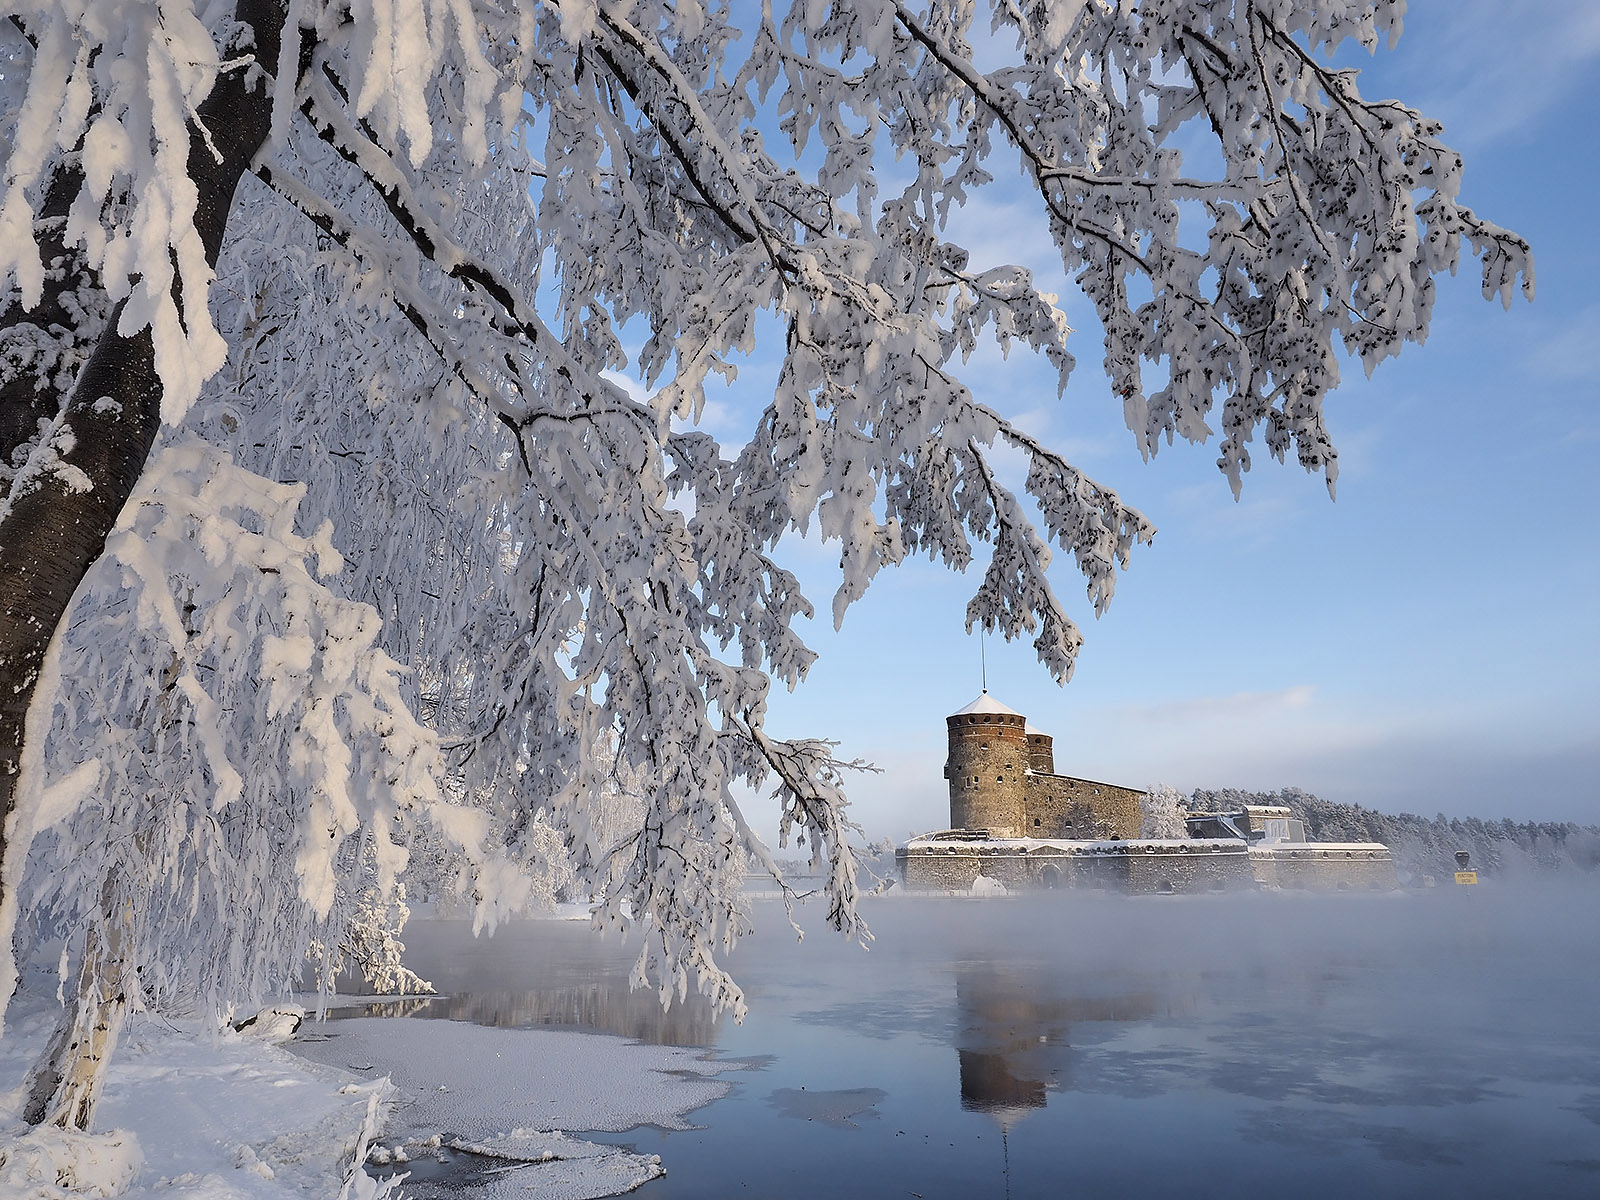 Обои St Olafs Castle Savonlinna Finland на рабочий стол